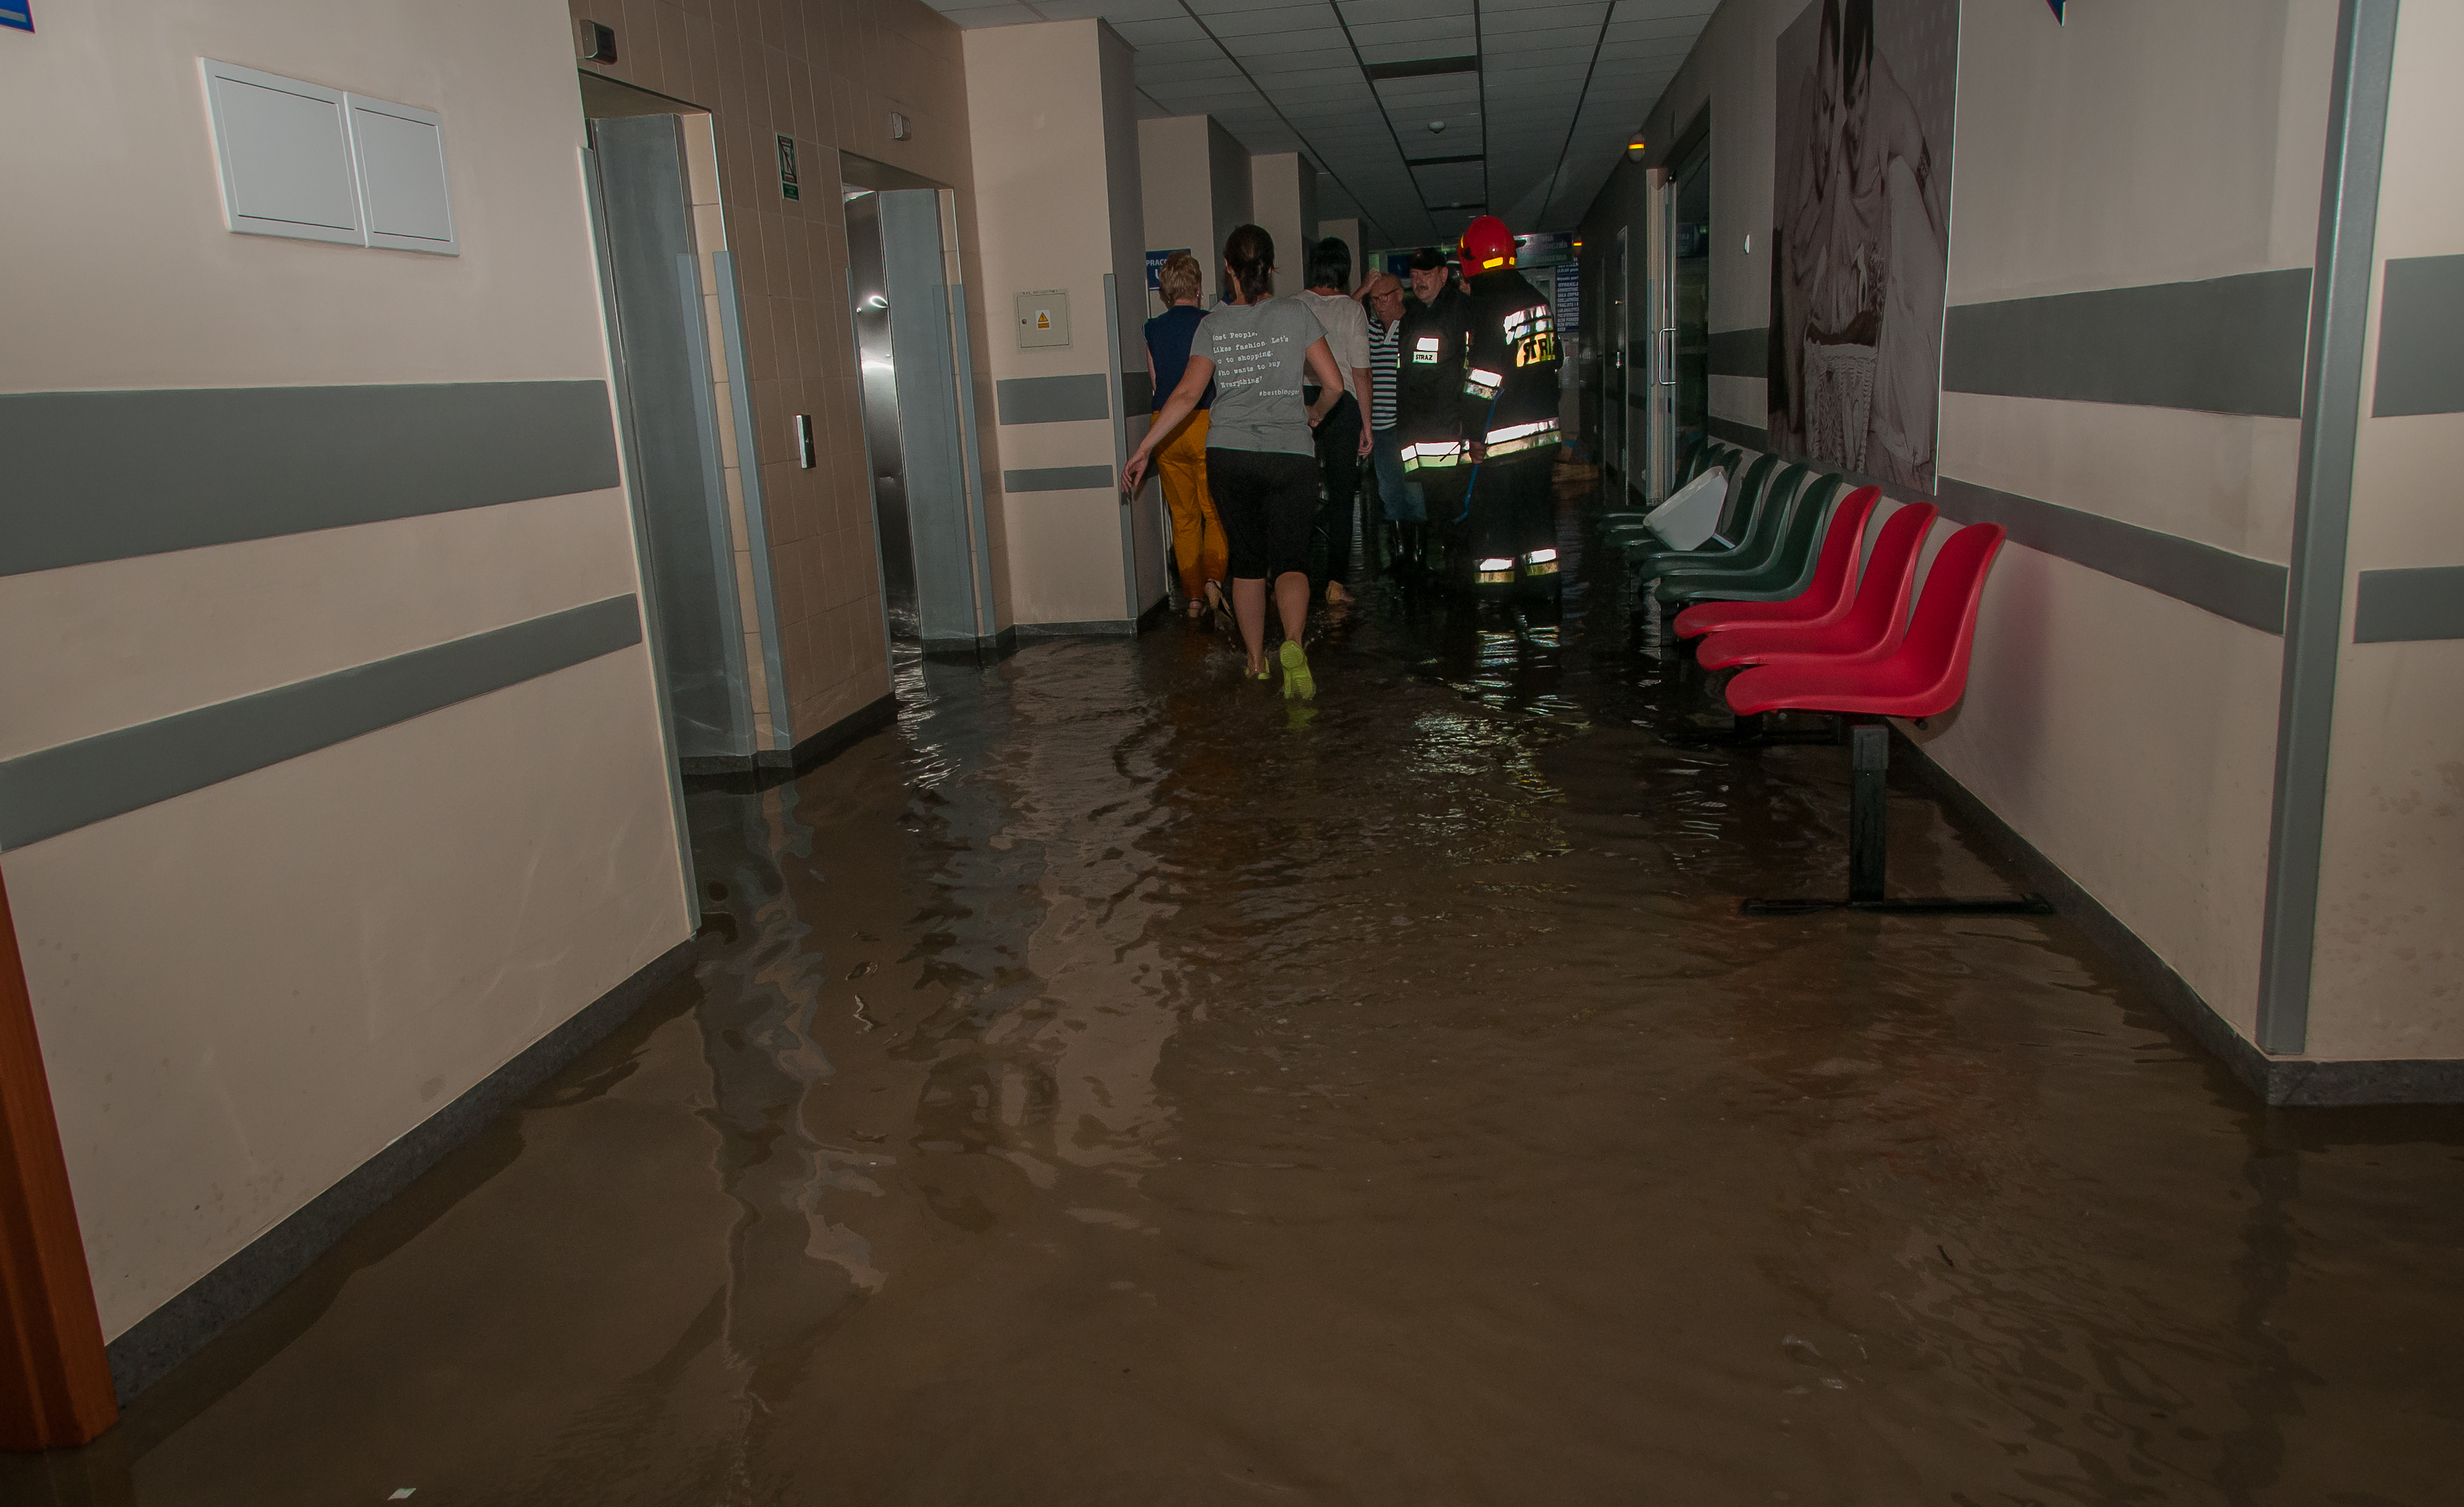 zalany szpitalny korytarz